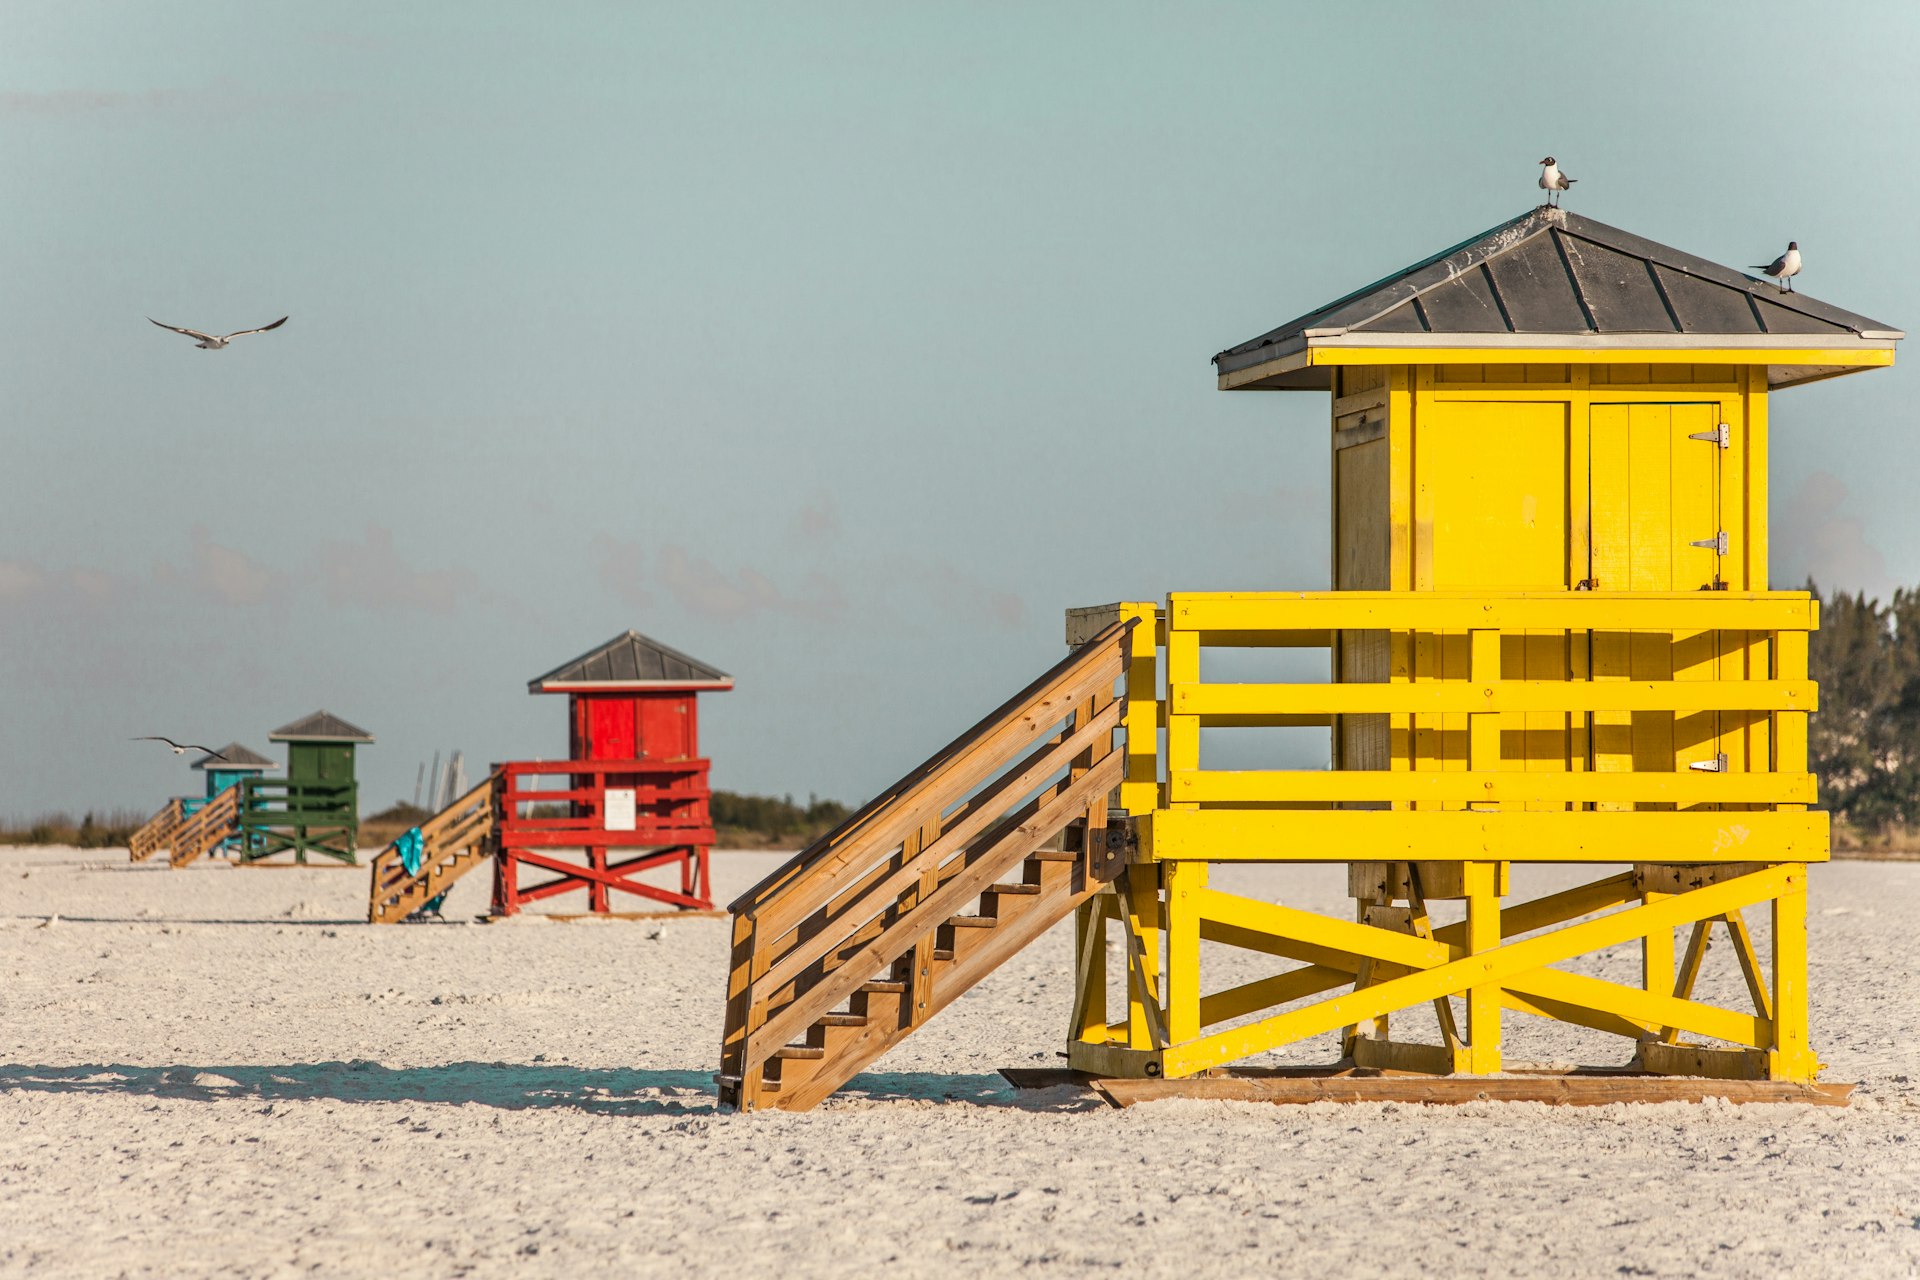 Lifeguard stands at Siesta Key Beach, Florida